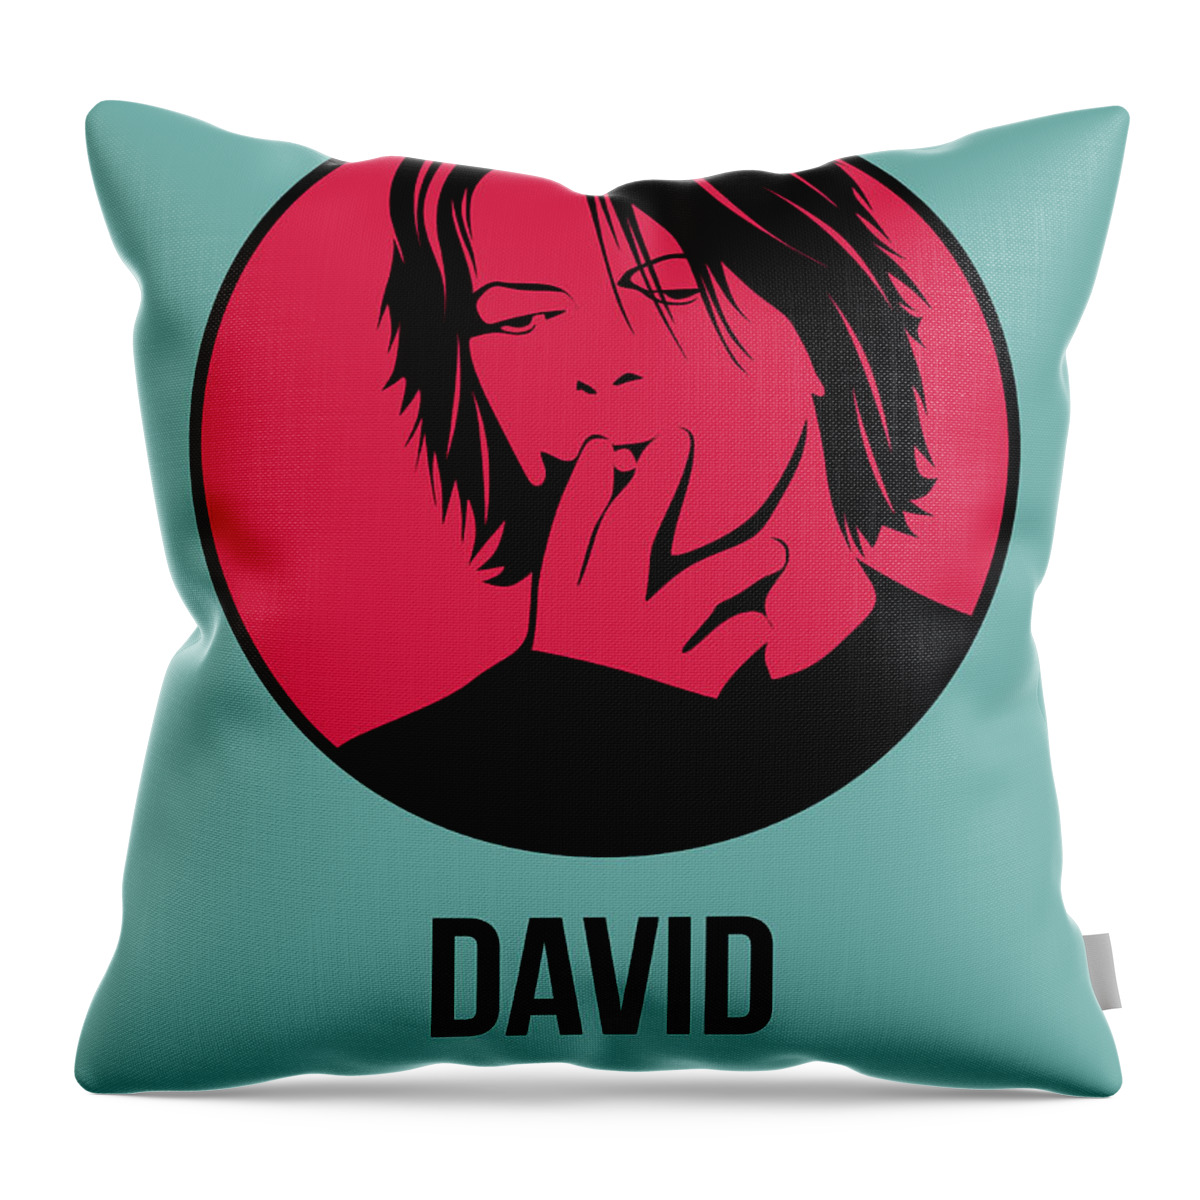 Music Throw Pillow featuring the digital art David Poster 3 by Naxart Studio